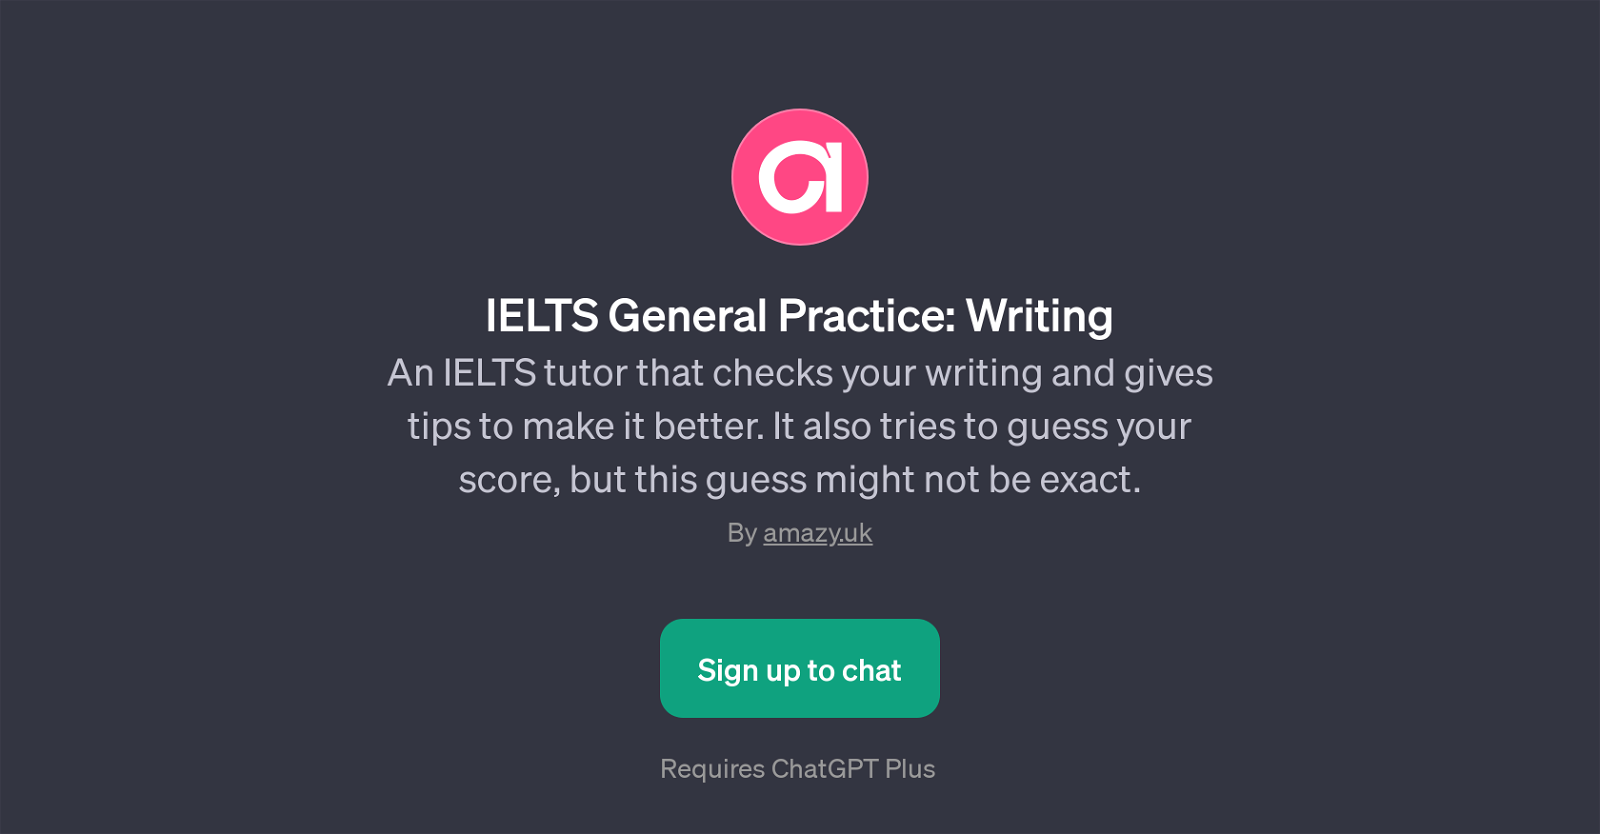 IELTS General Practice: Writing website